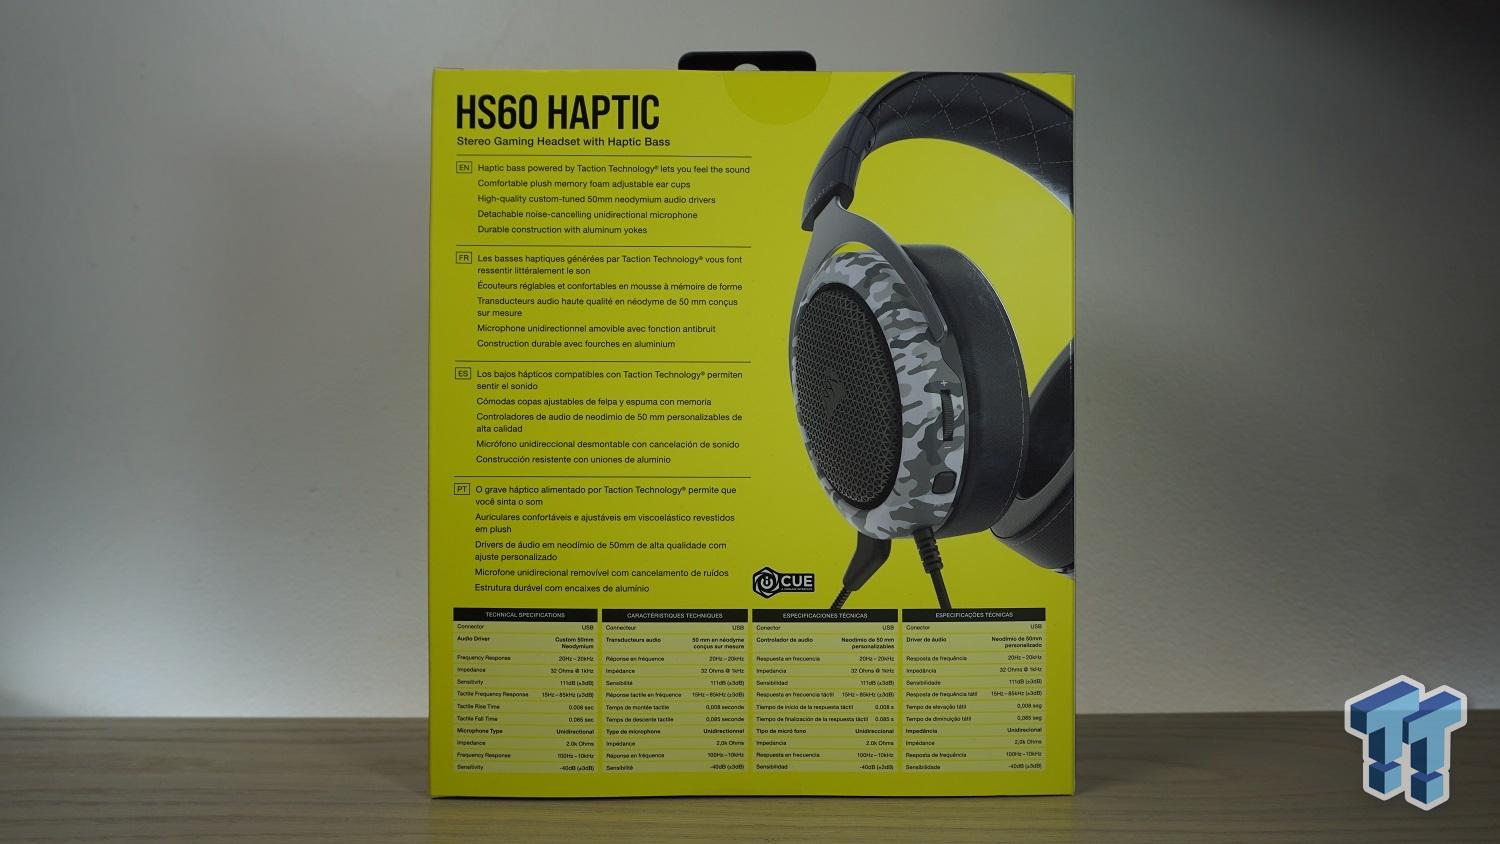 Corsair HS60 HAPTIC Stereo Gaming Headset Review